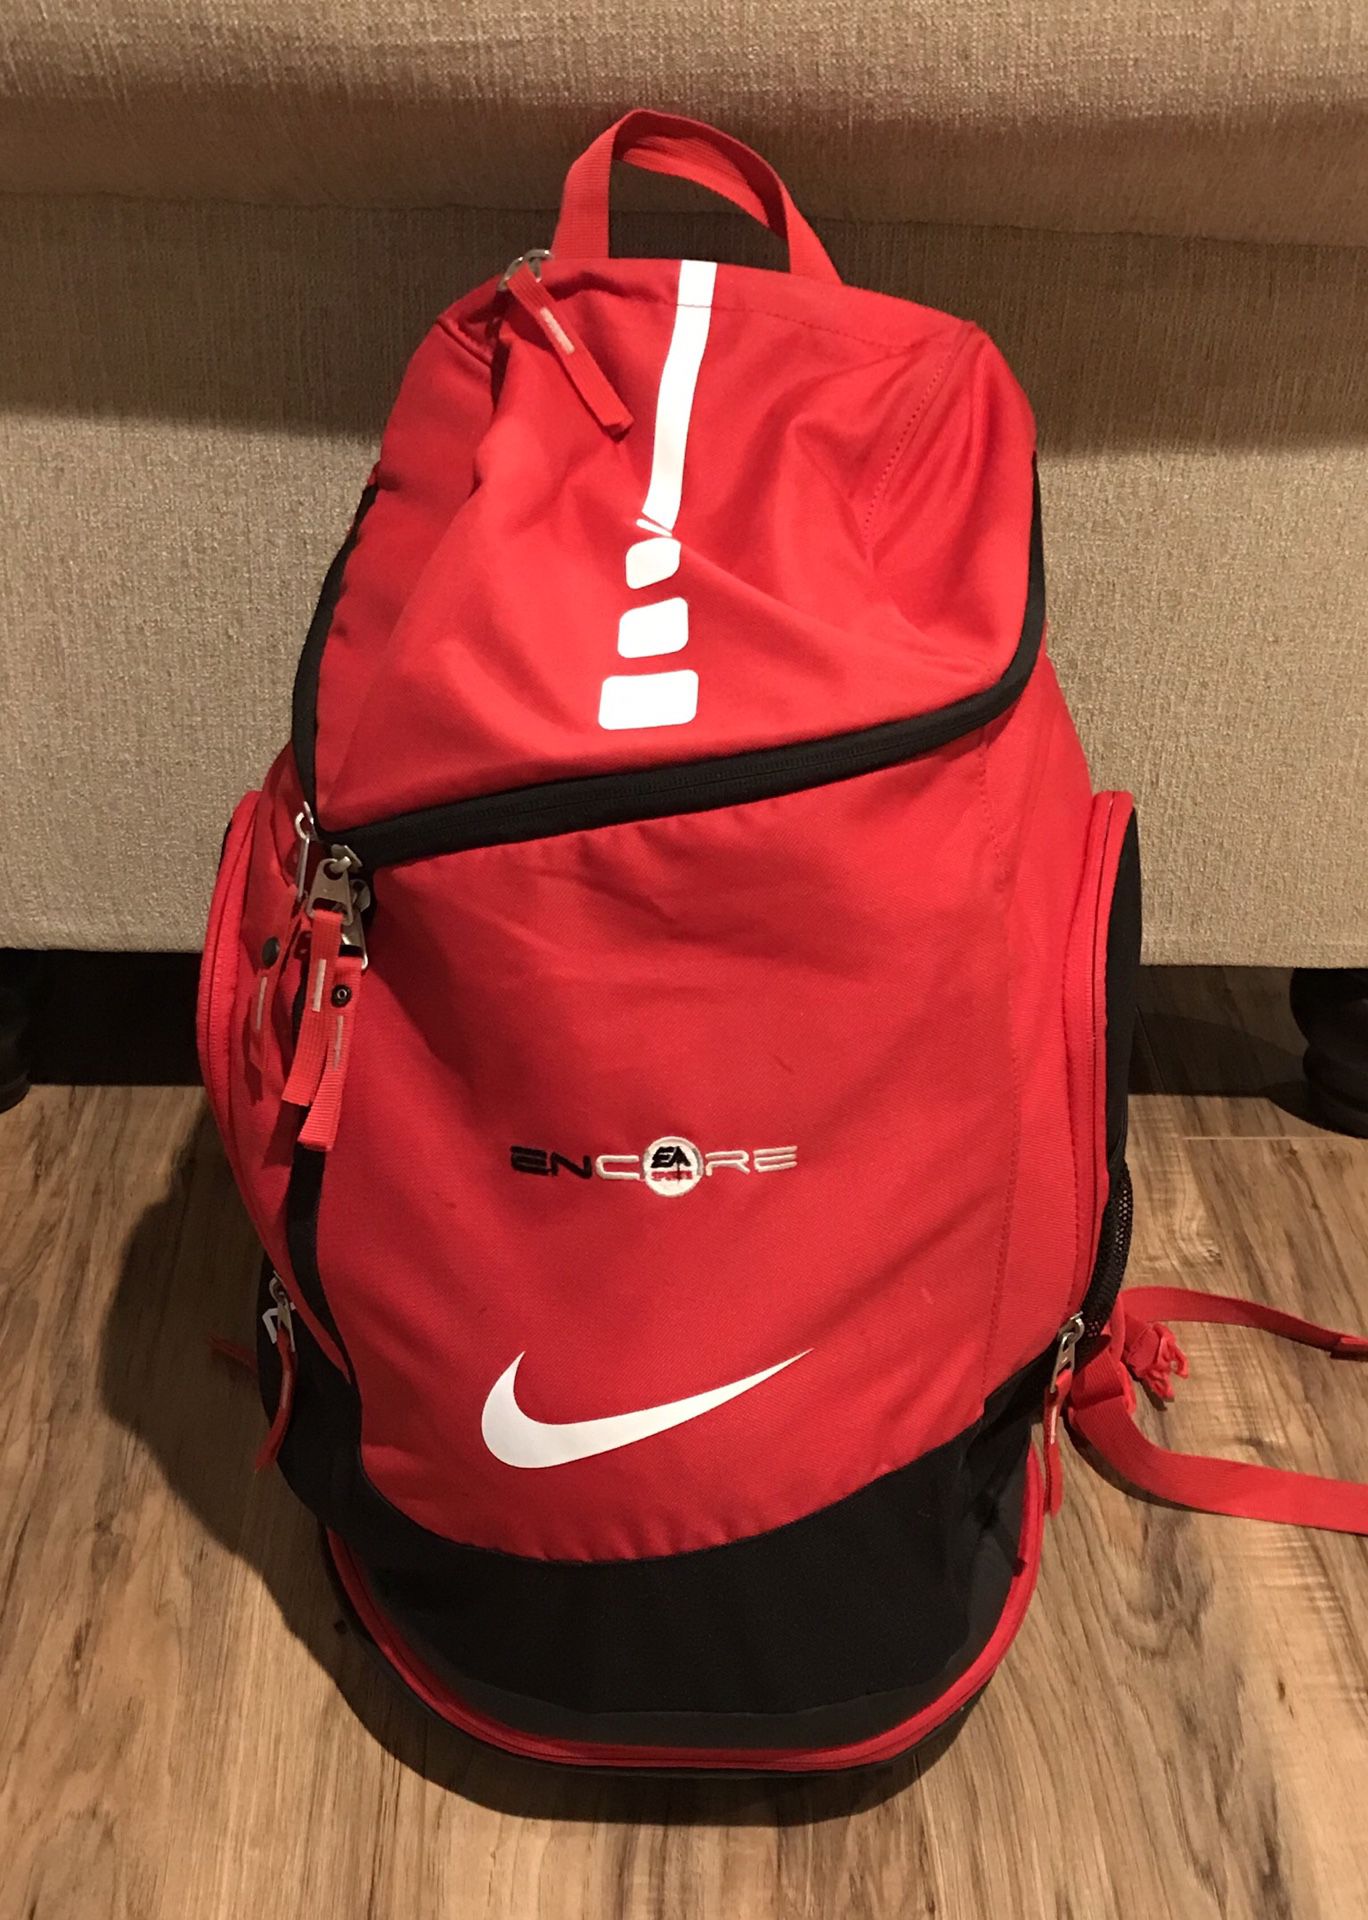 Nike Air Max Elite Hoops Basketball Backpack 2.0 Red and Black